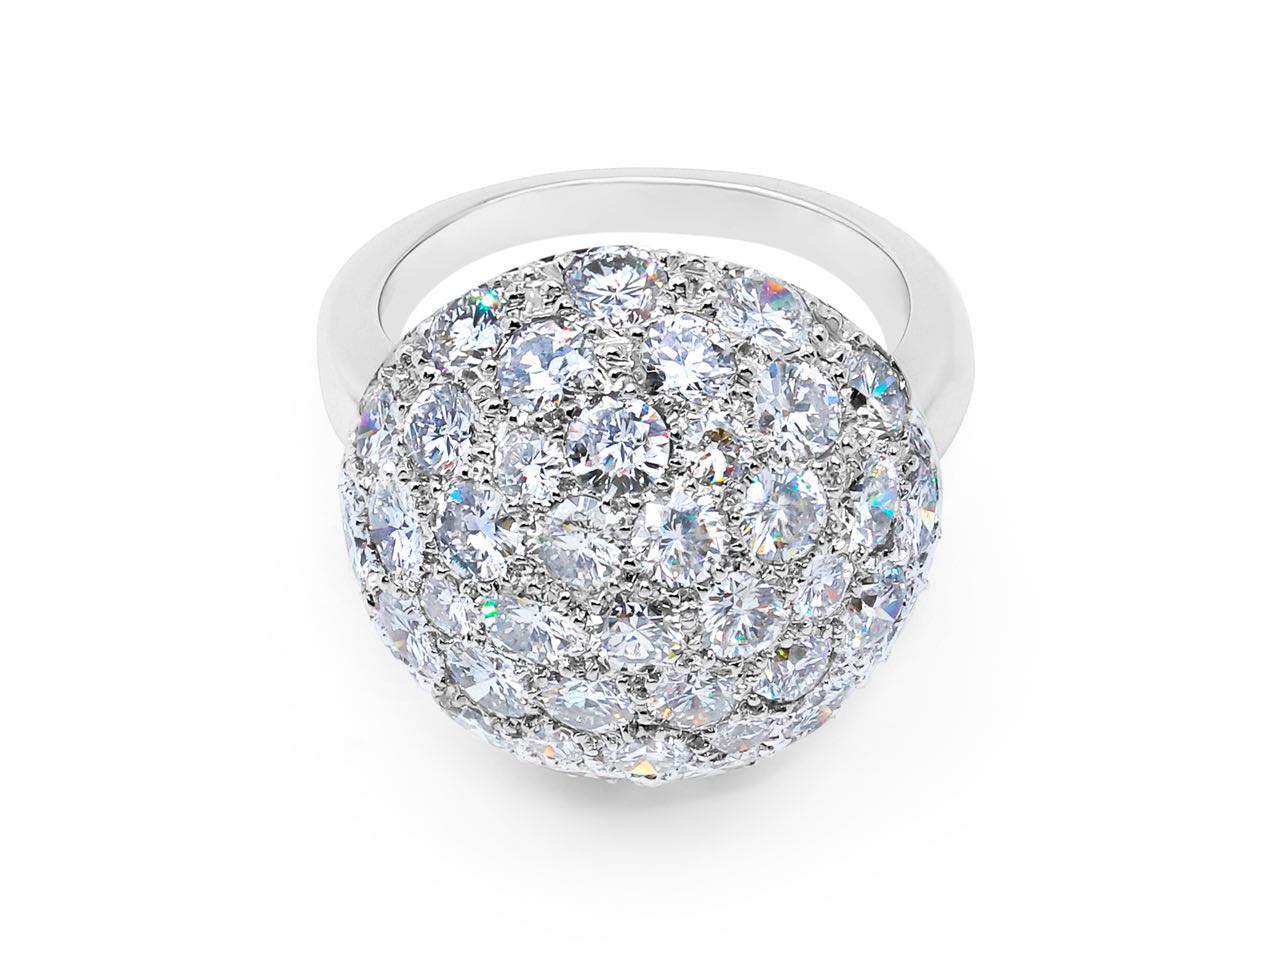 Beladora 'Bespoke' Diamond Dome Ring in 18K White Gold